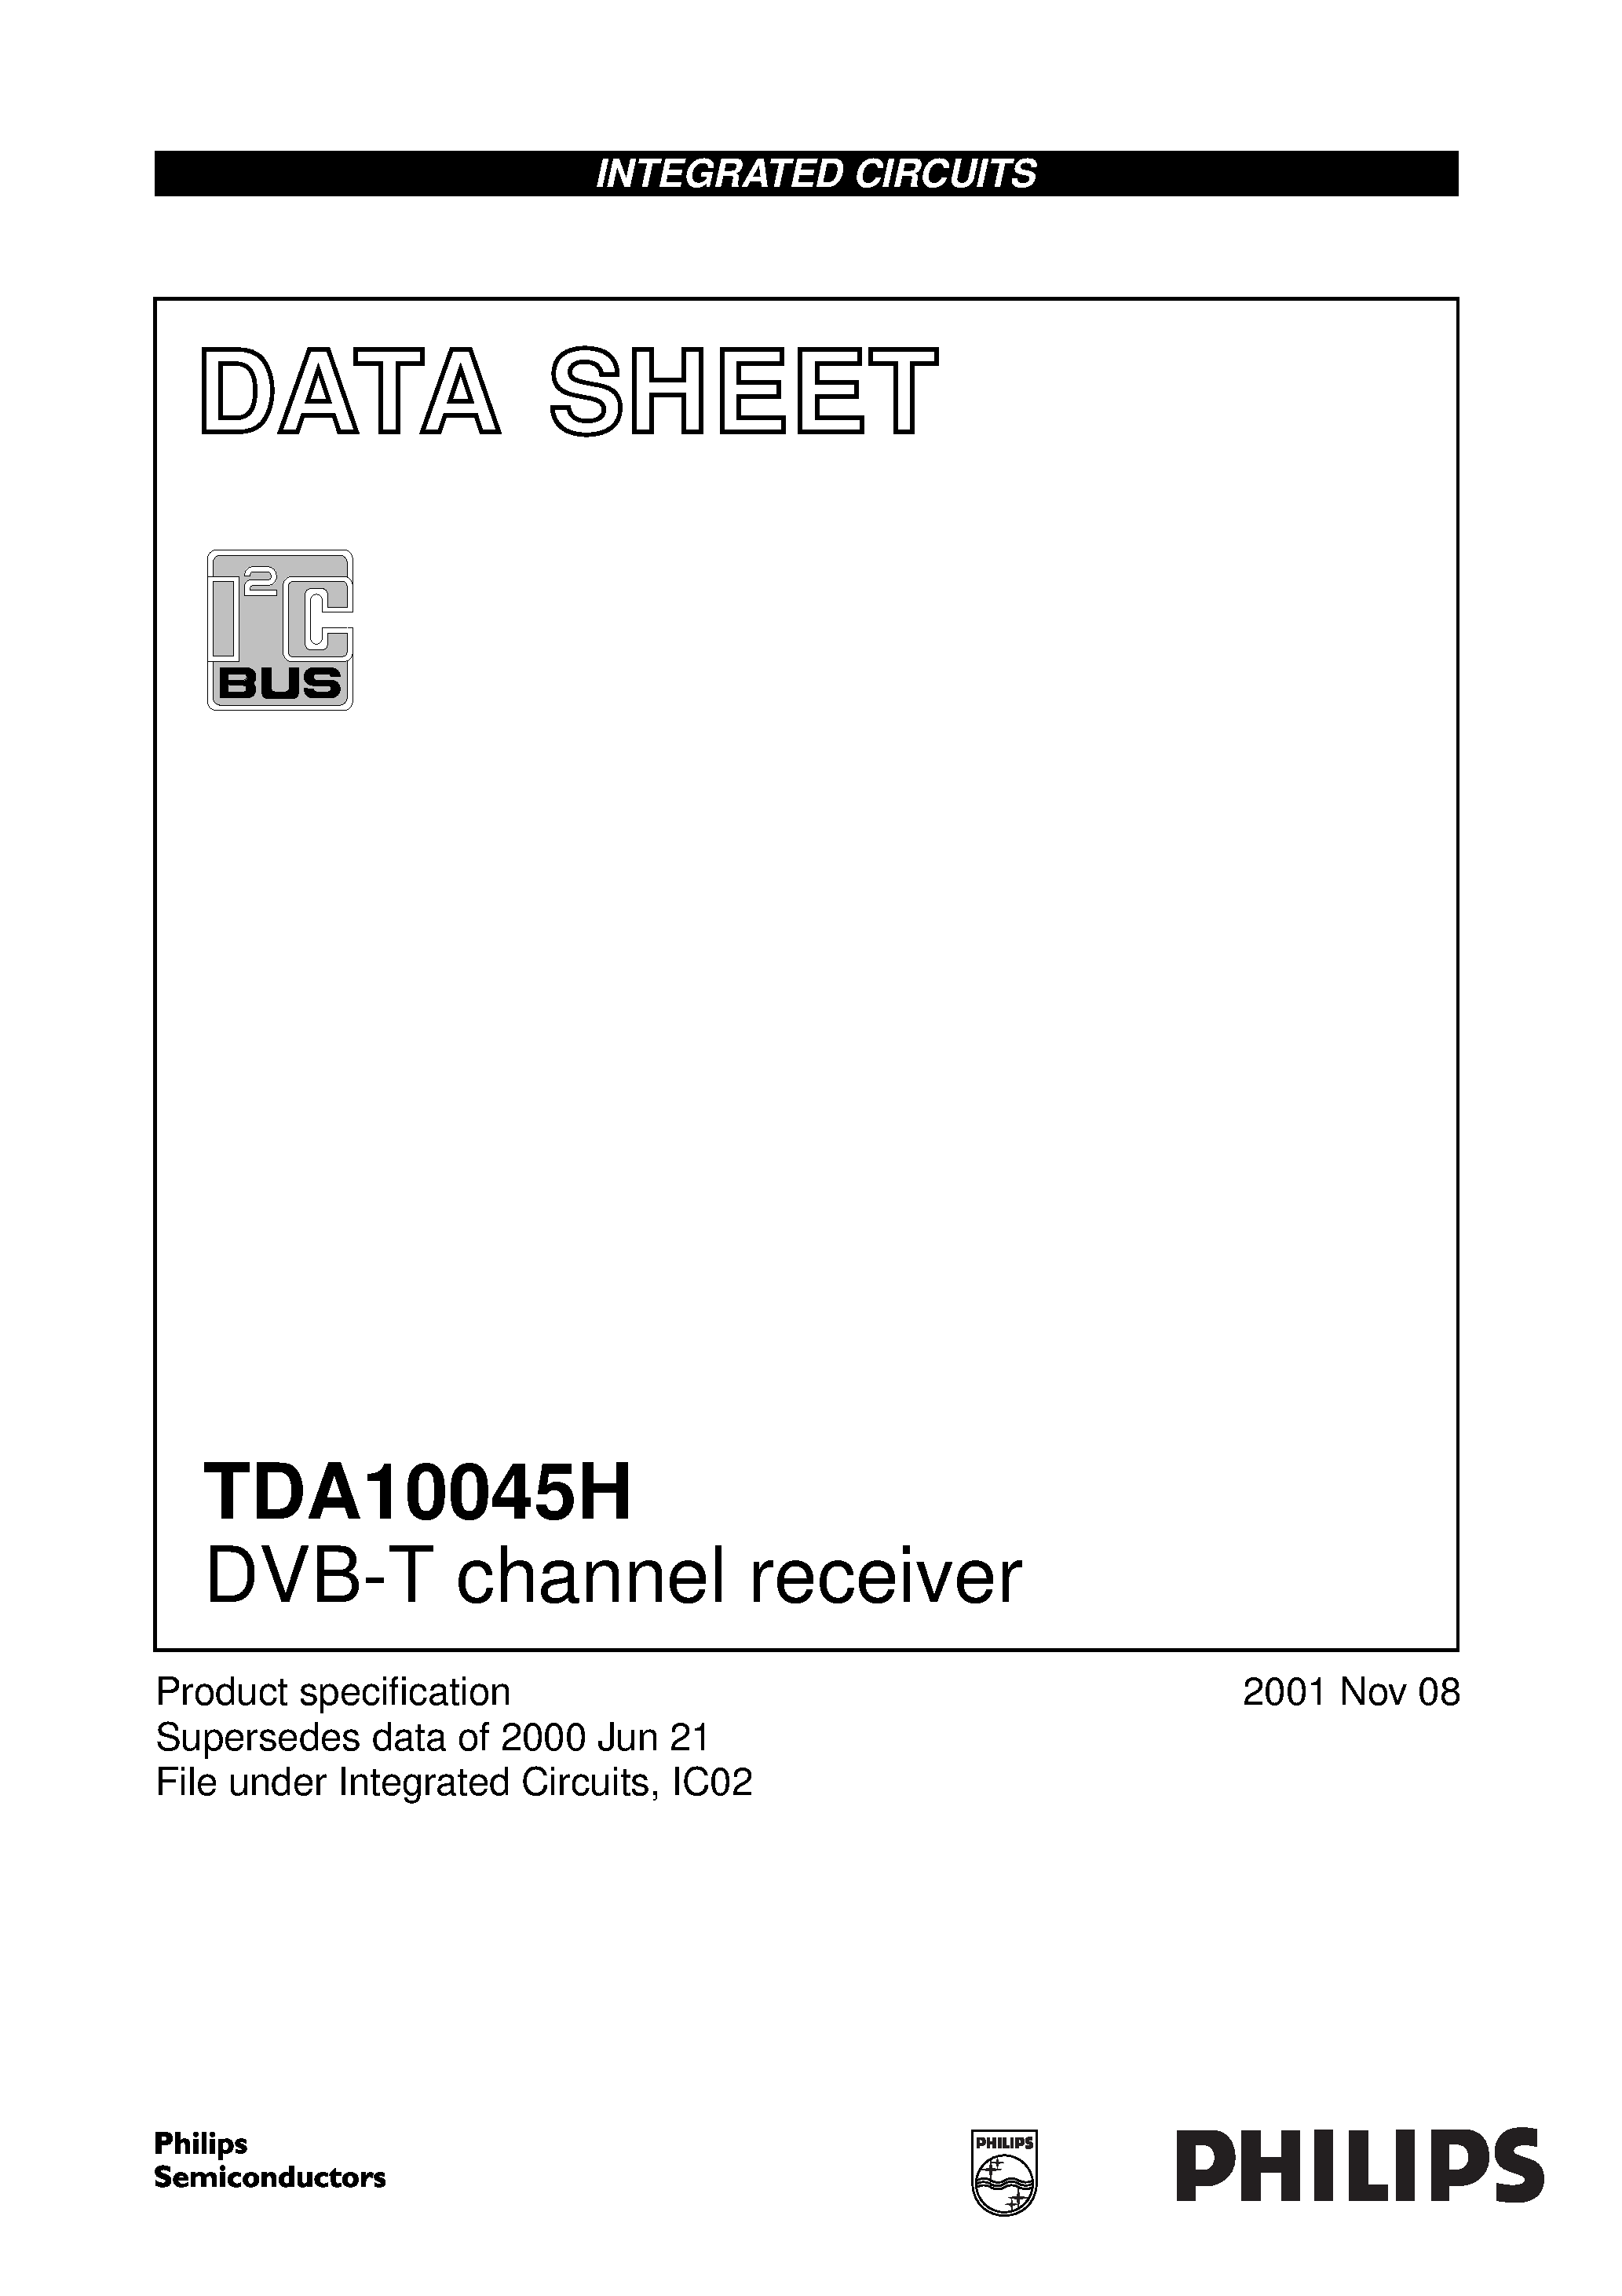 Даташит TDA10045H - DVB-T channel receiver страница 1